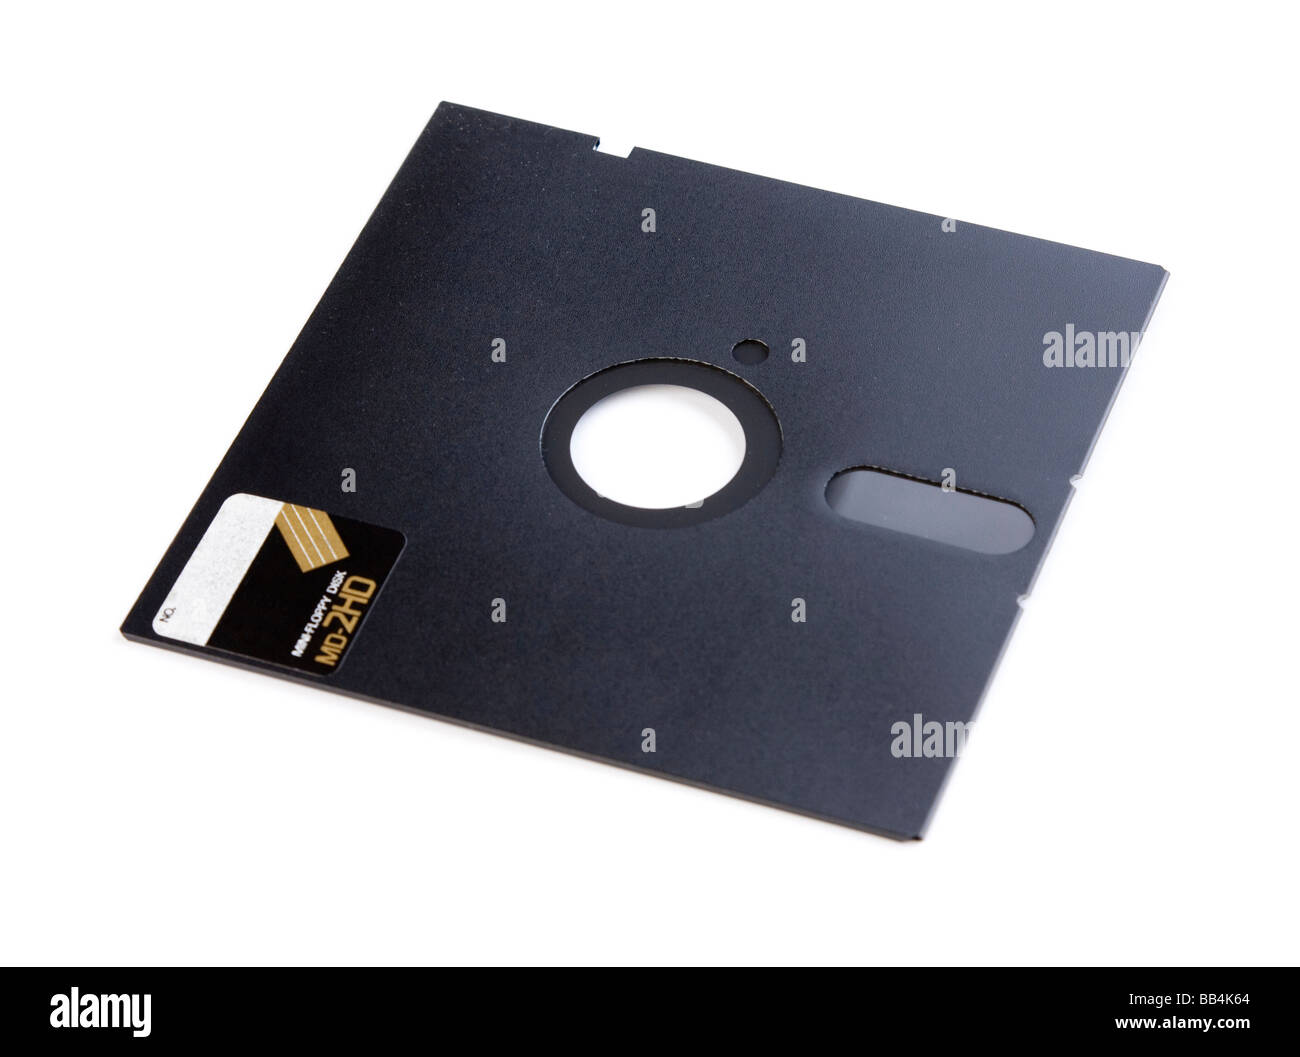 Floppy disk da 5,25 ' dimensione che terrà 360Kb di dati Foto Stock